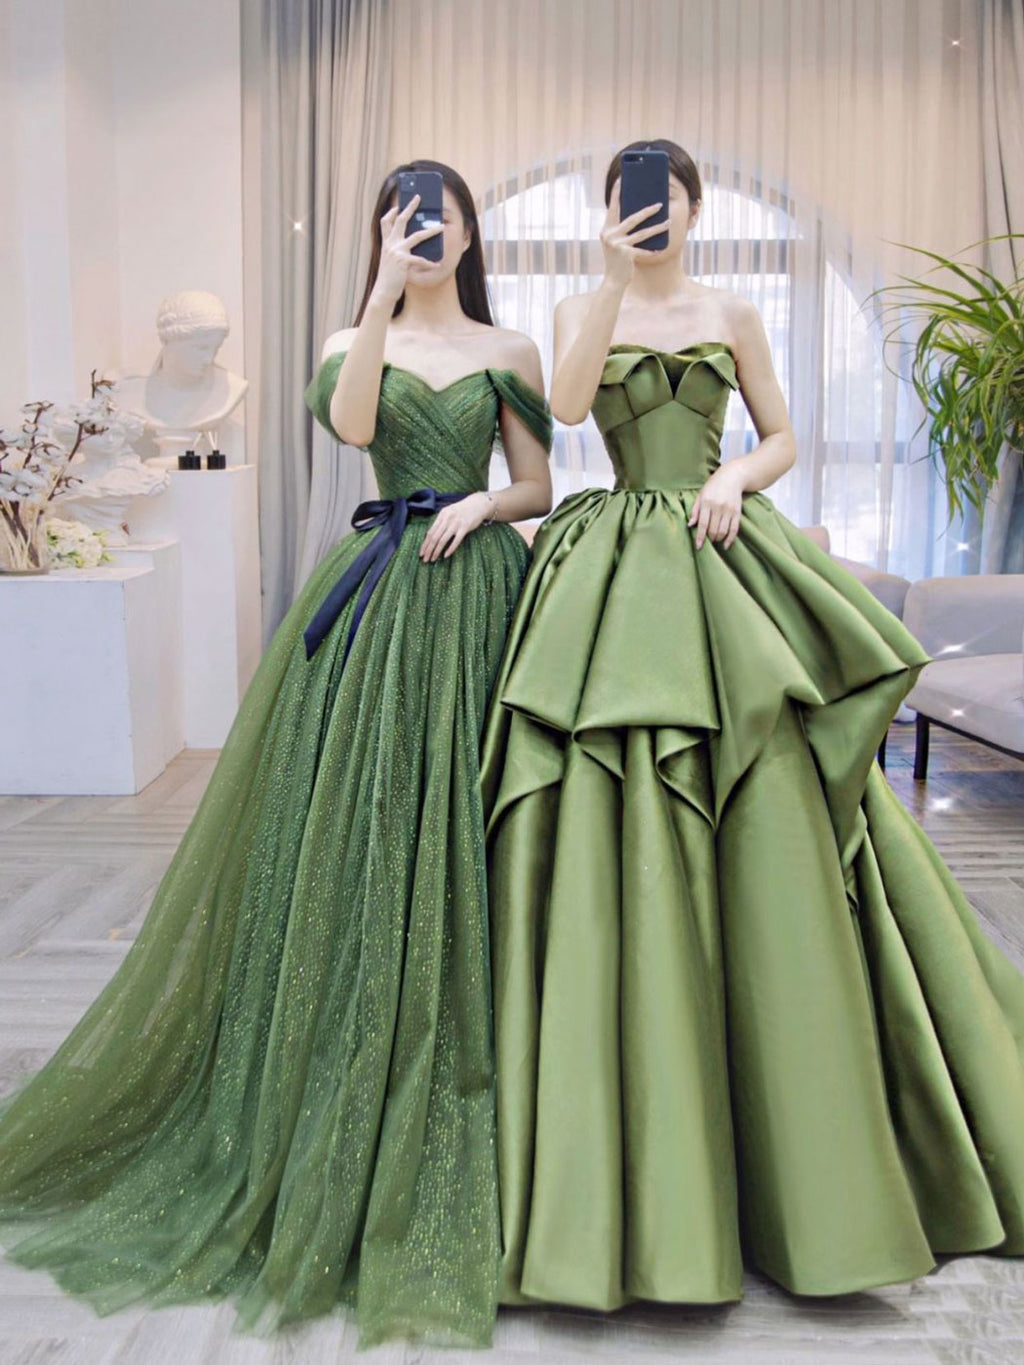 A-Line Tulle Off Shoulder Green Long Prom Dress, Green Formal Evening Dress